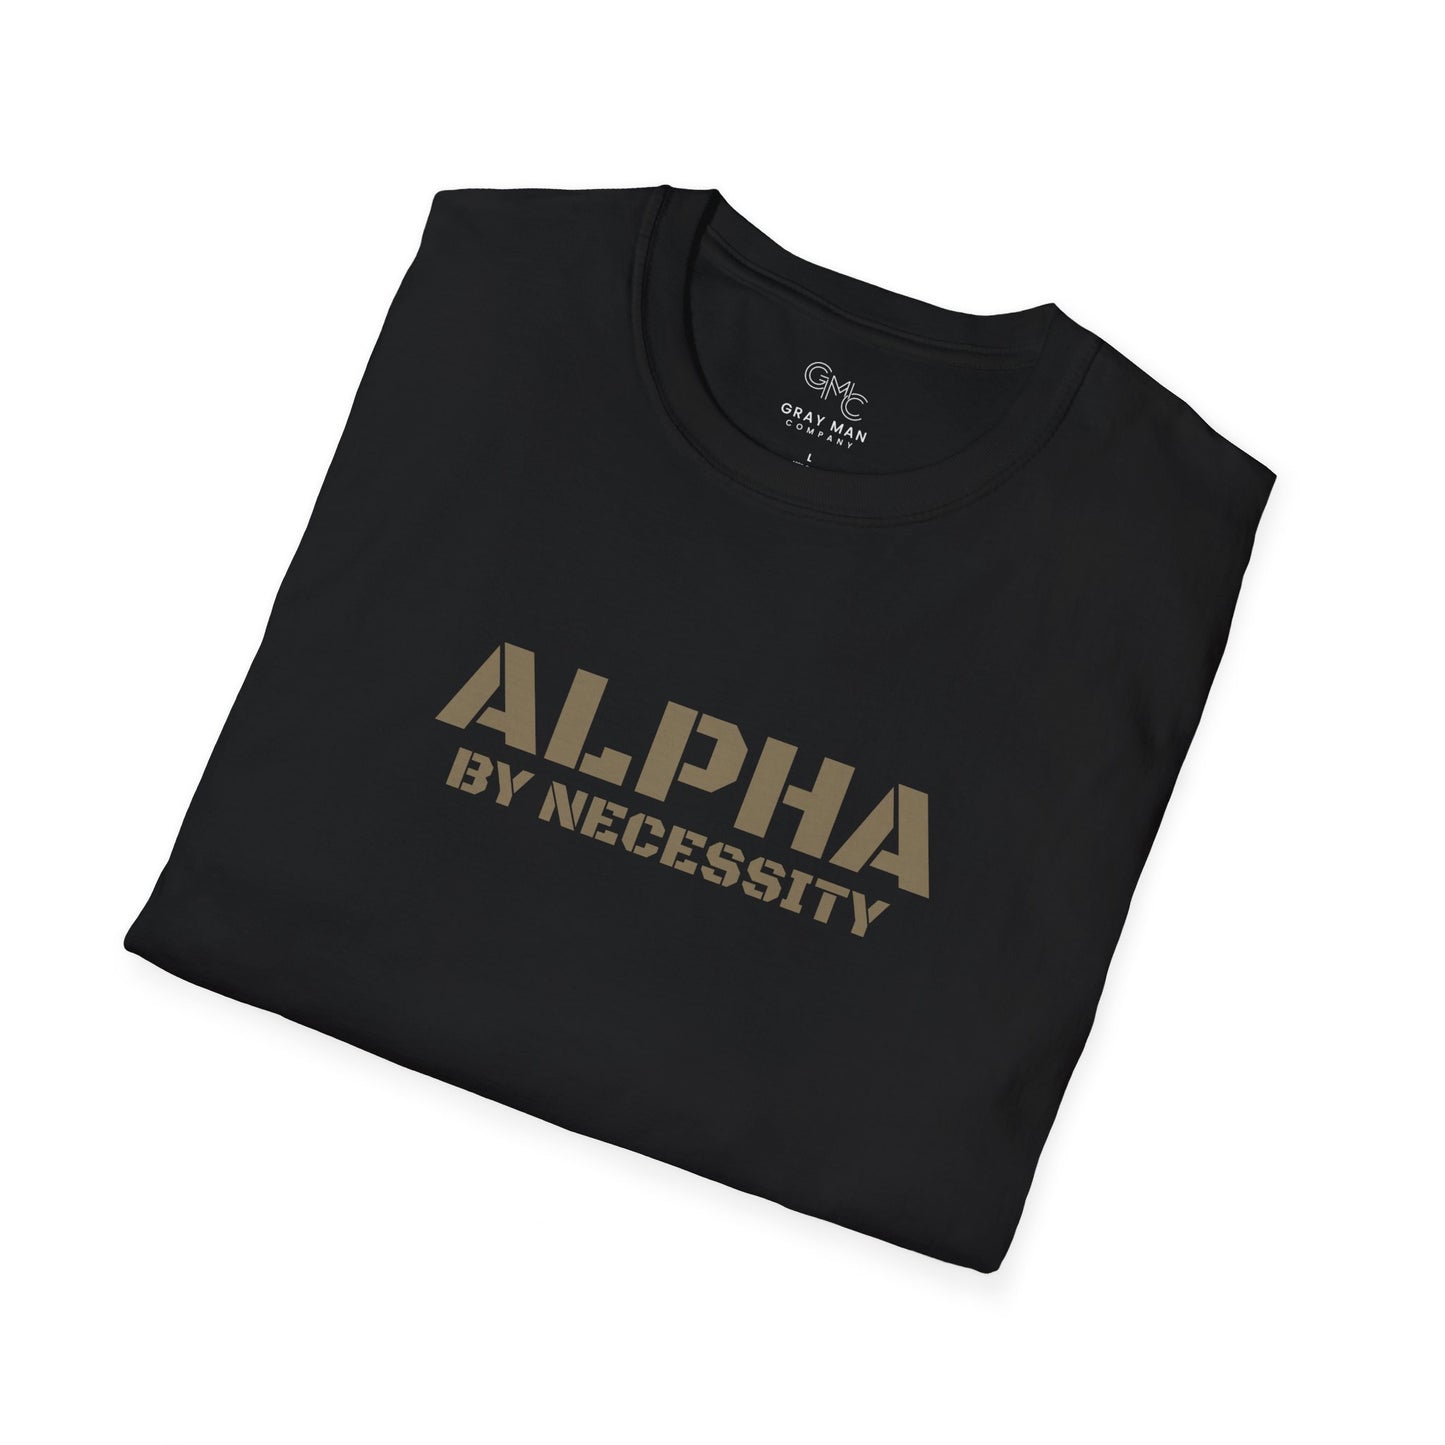 EDC Logo T-Shirt - ALPHA